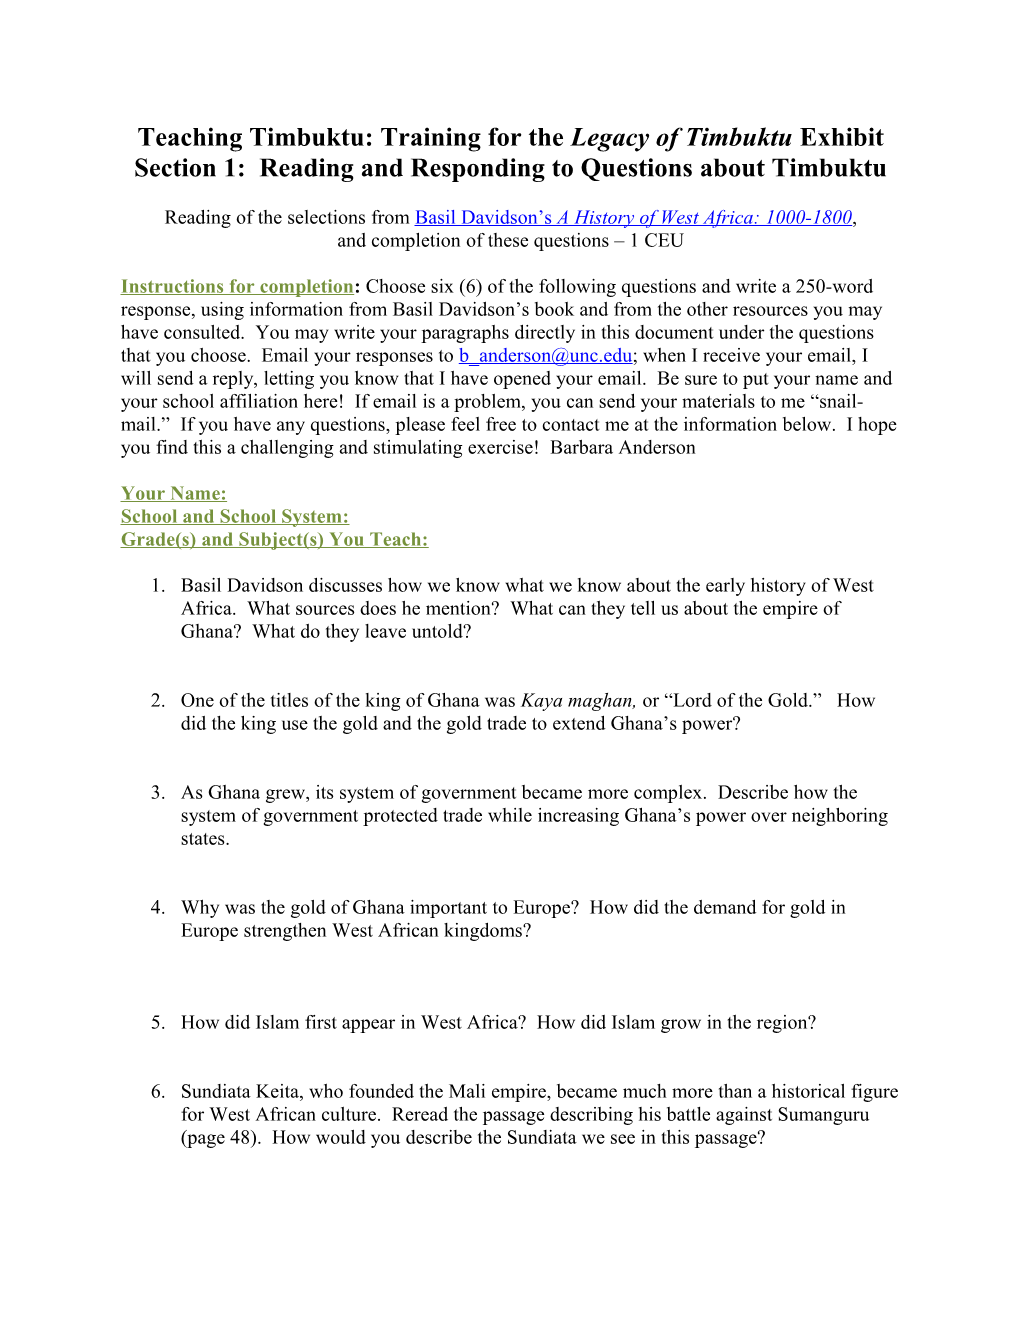 Teaching Timbuktu: Training for the Legacy of Timbuktu Exhibit